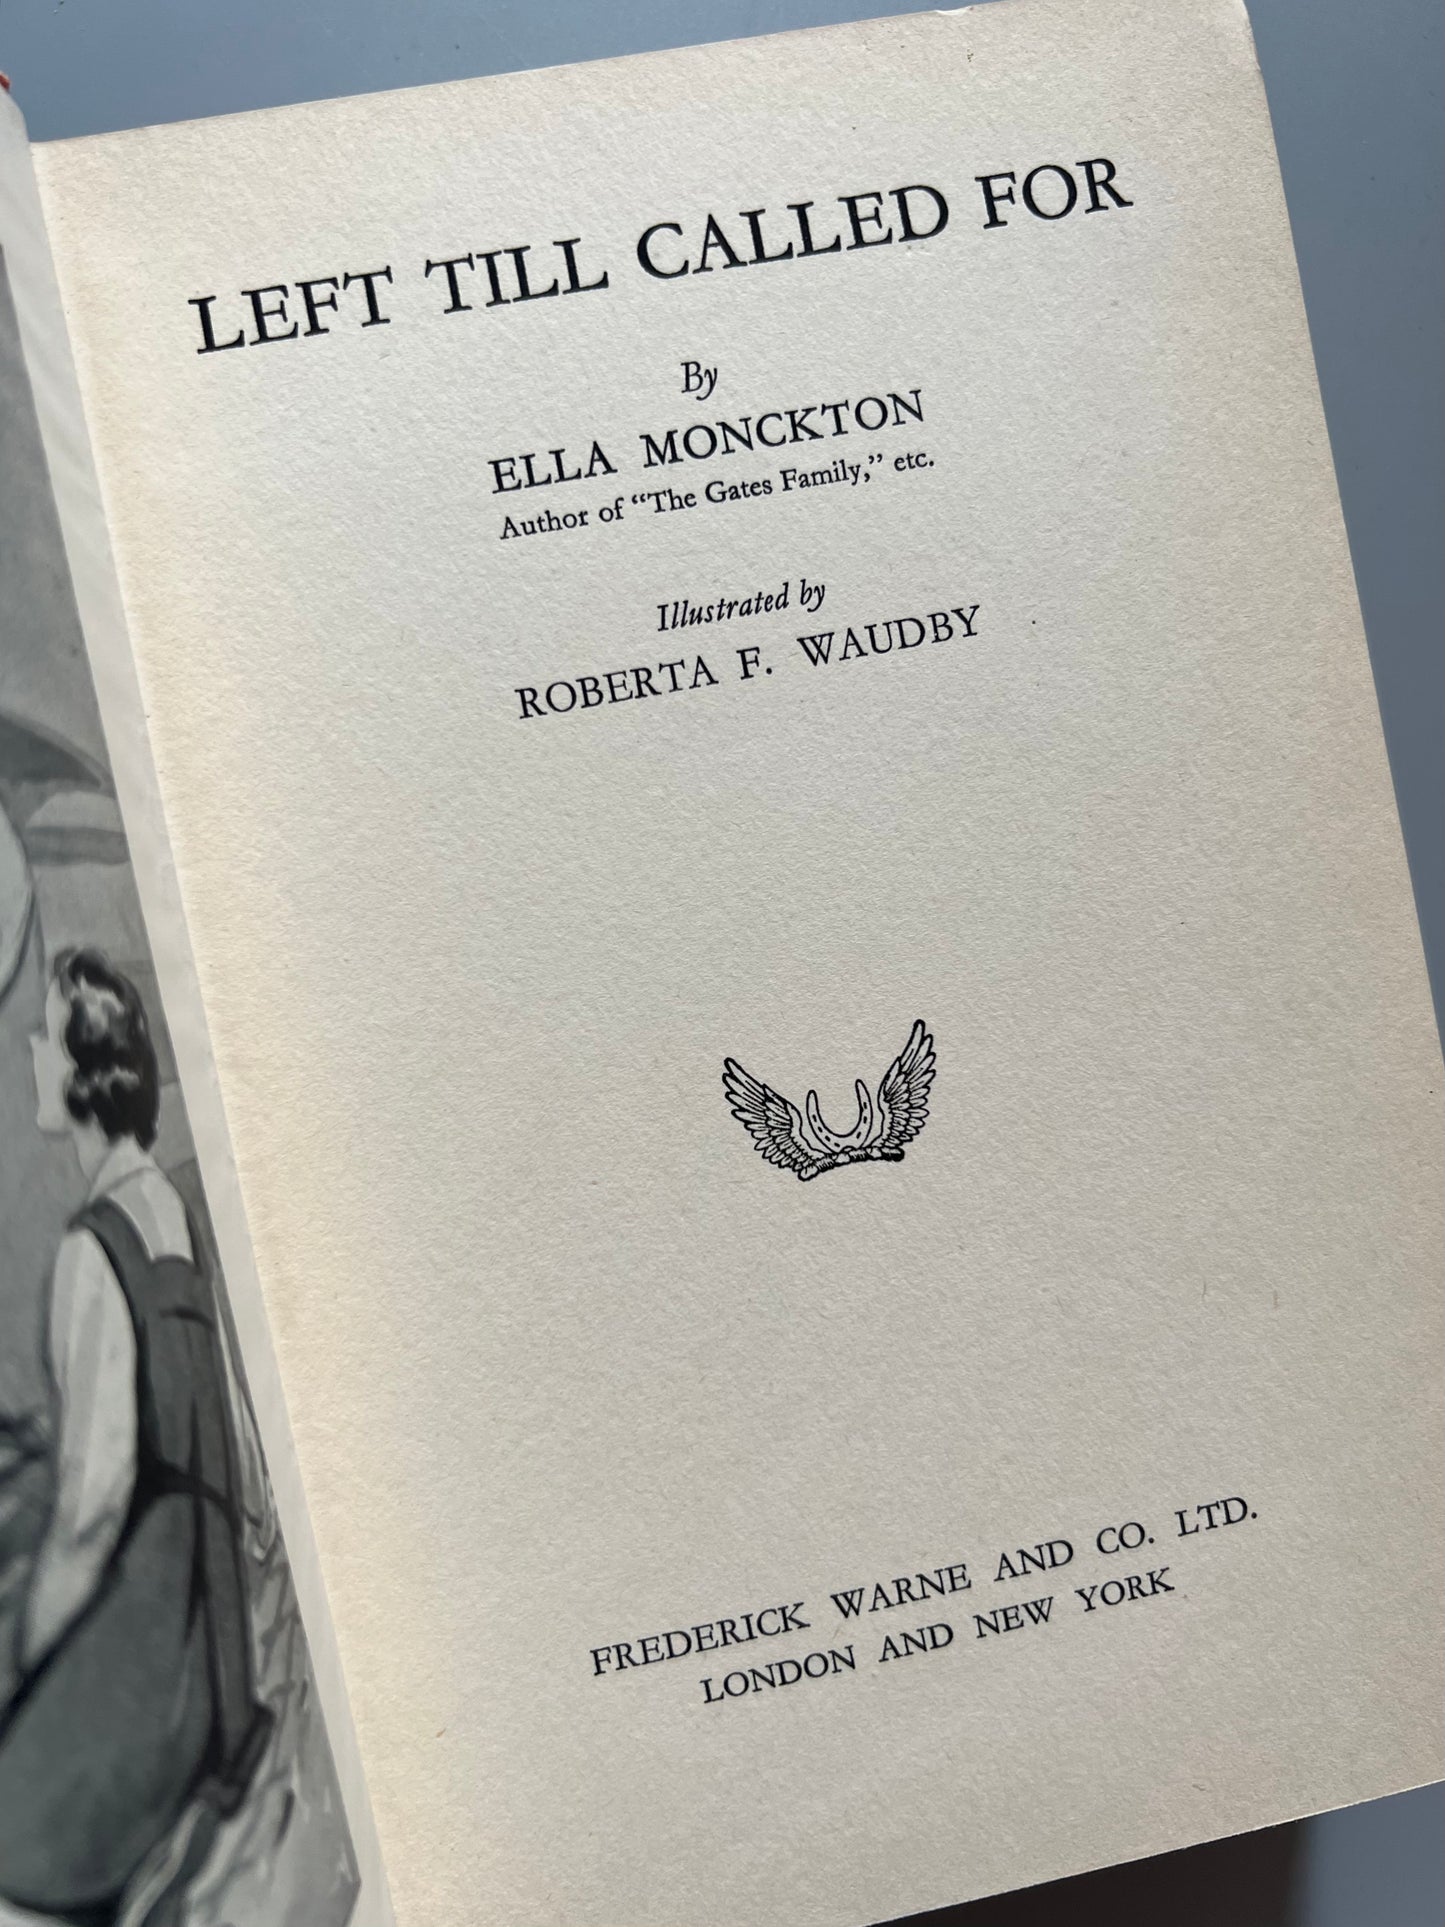 Left till called for, Ella Monckton - Frederick Warne and Co, 1937